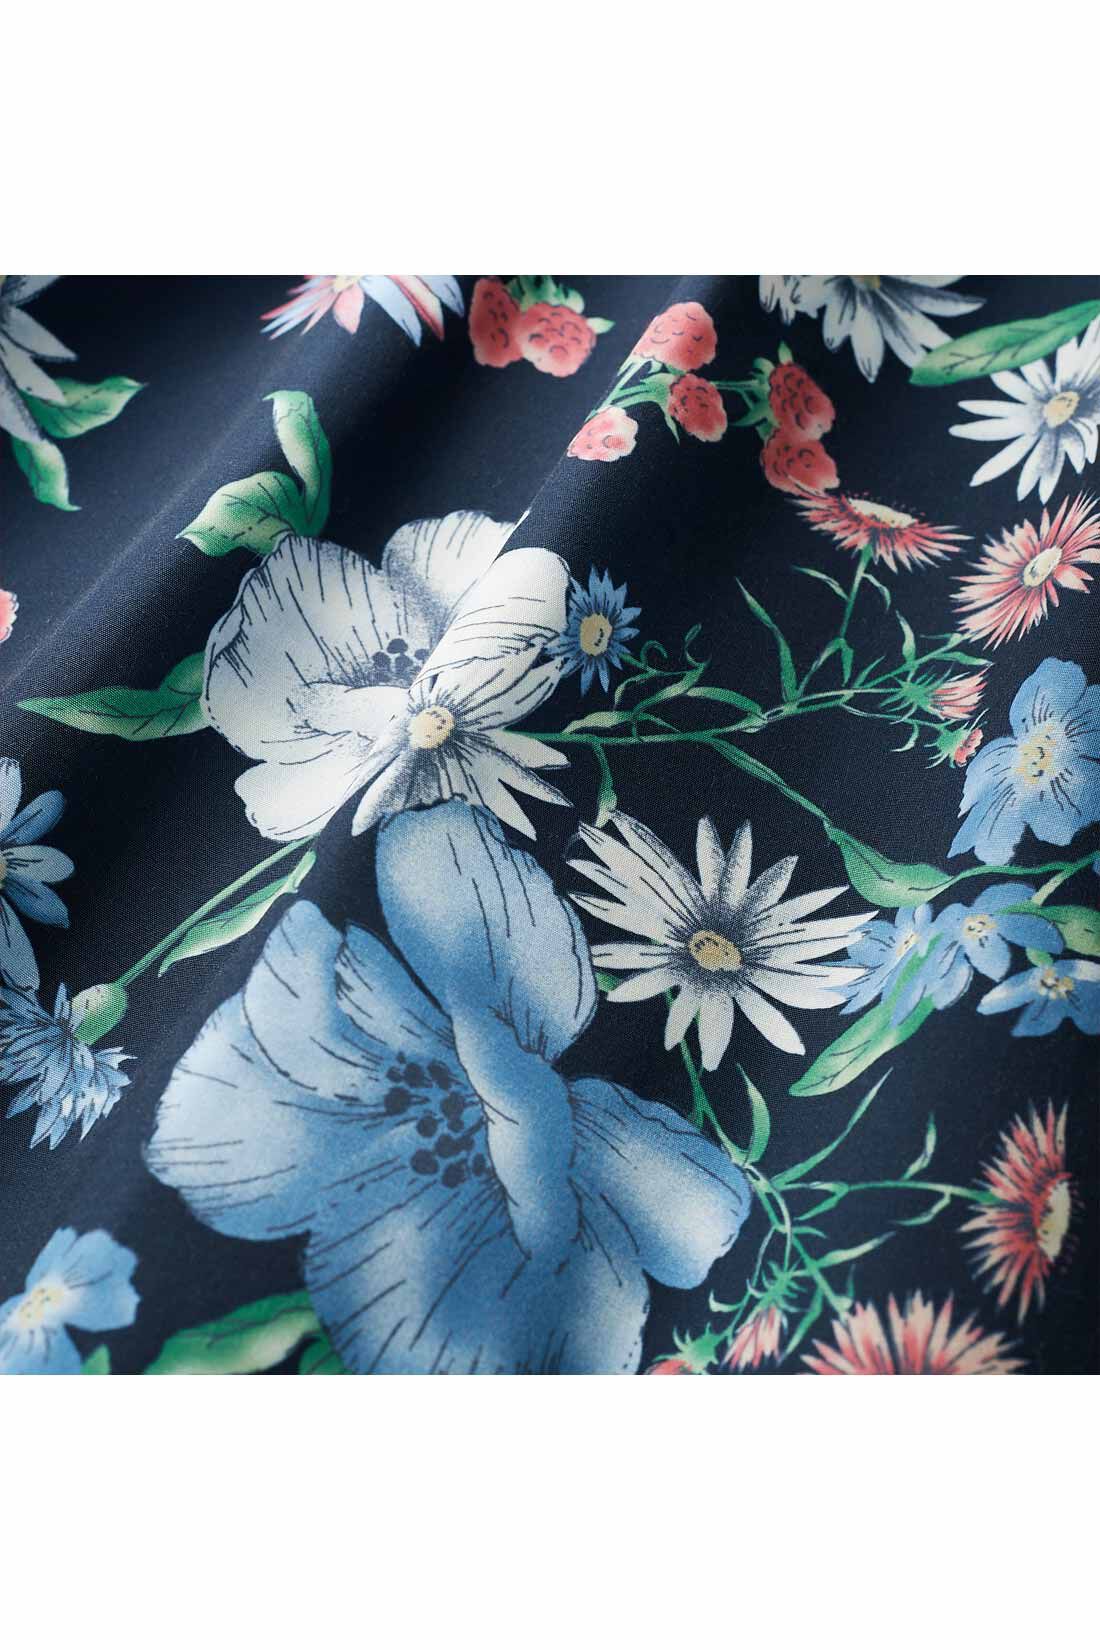 IEDIT|IEDIT[イディット] 華やか柄でコーディネイトが着映えする花柄フレアースカート〈グレー〉|ほどよいハリ感のある高密度なきれいめ素材。